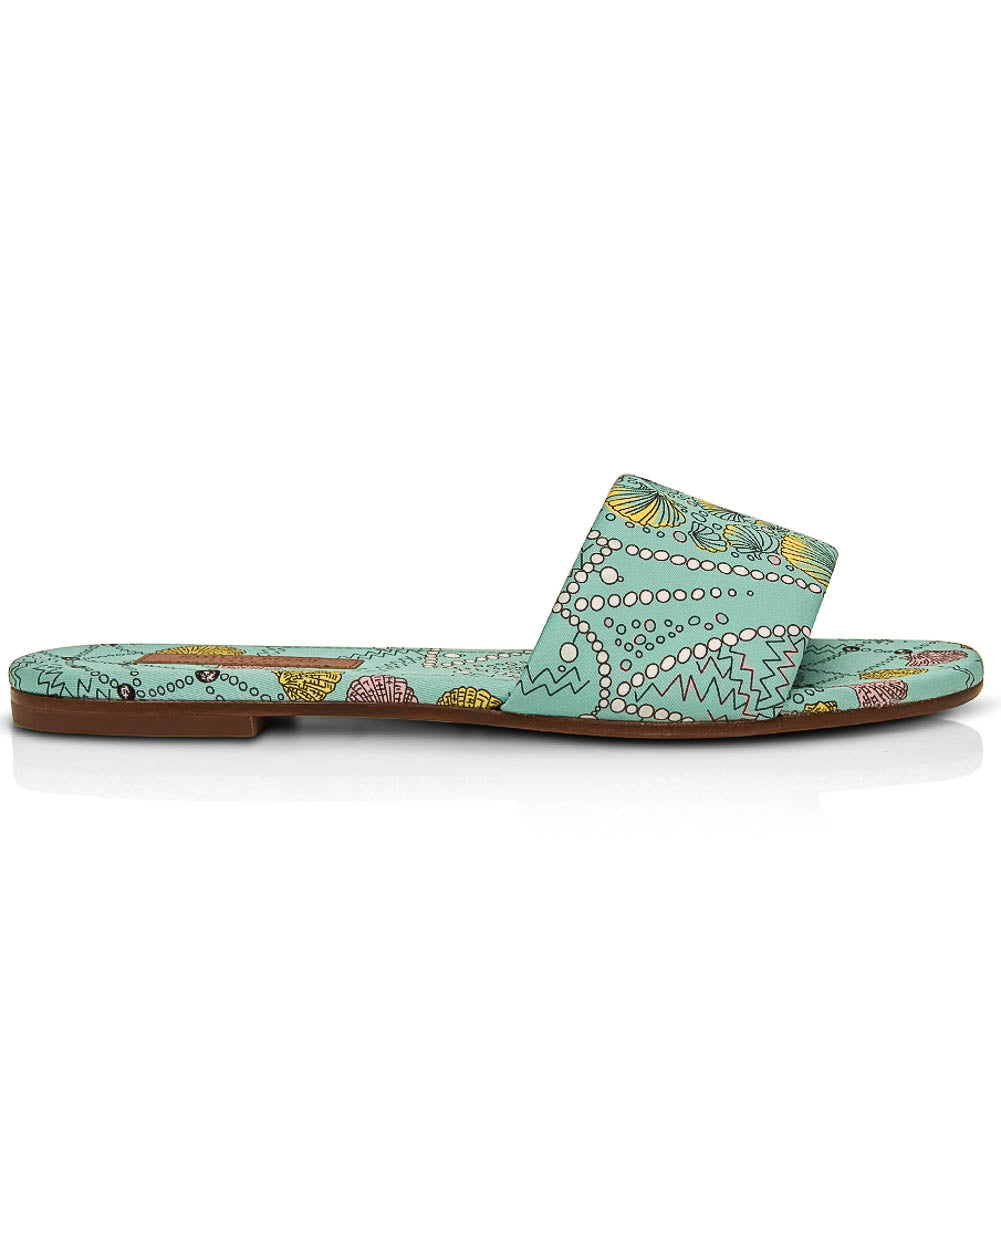 Conchiglie Print Slide Sandal in Turquoise